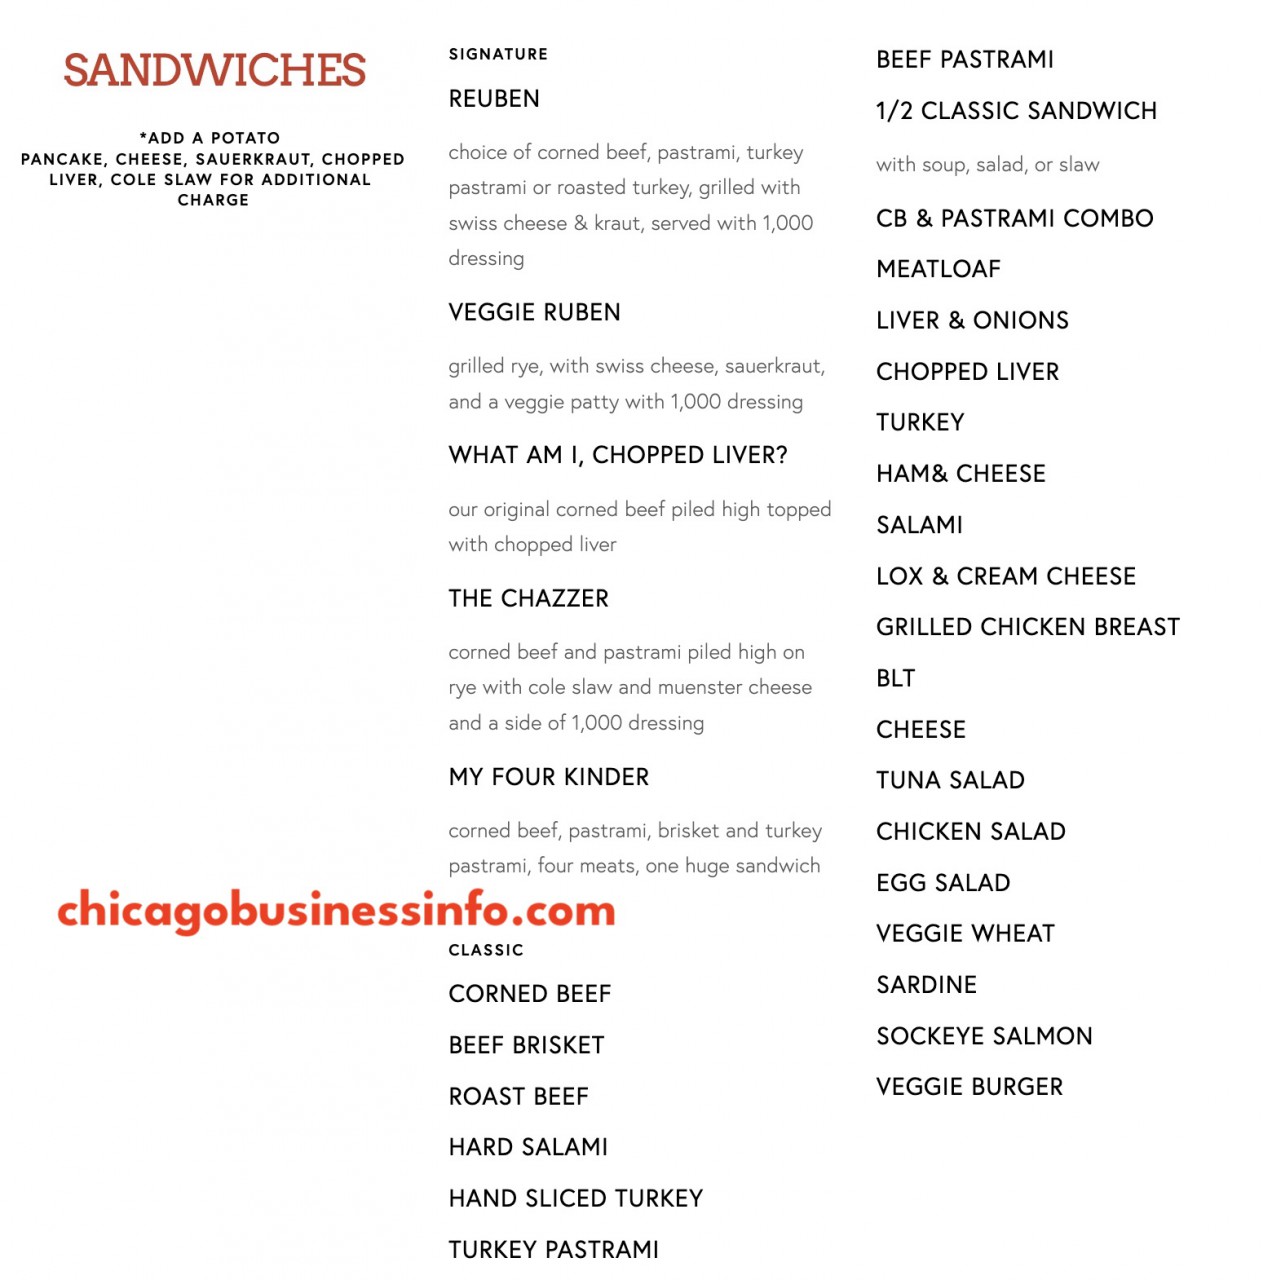 Mannys deli chicago sandwiches menu